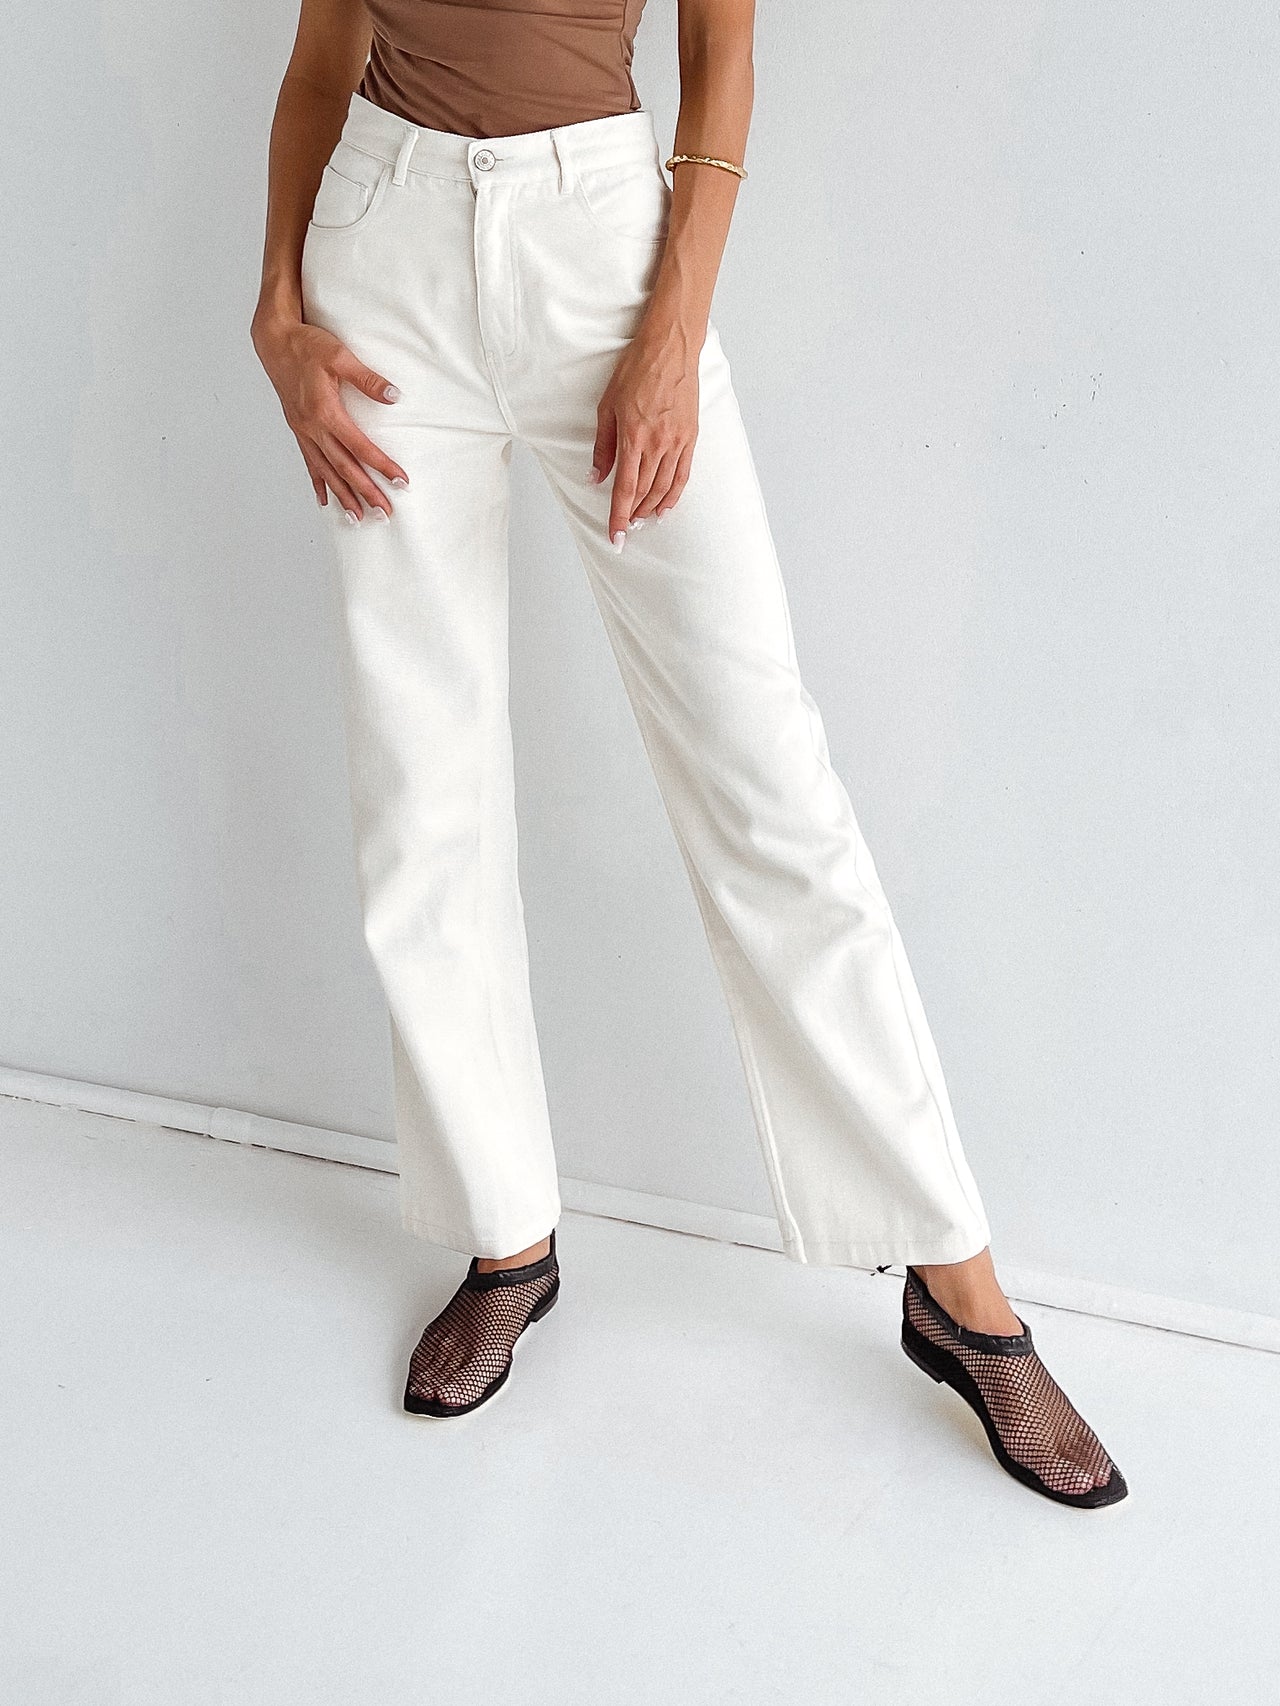 Tegan Rae Straight Leg Denim Jean - Vintage White